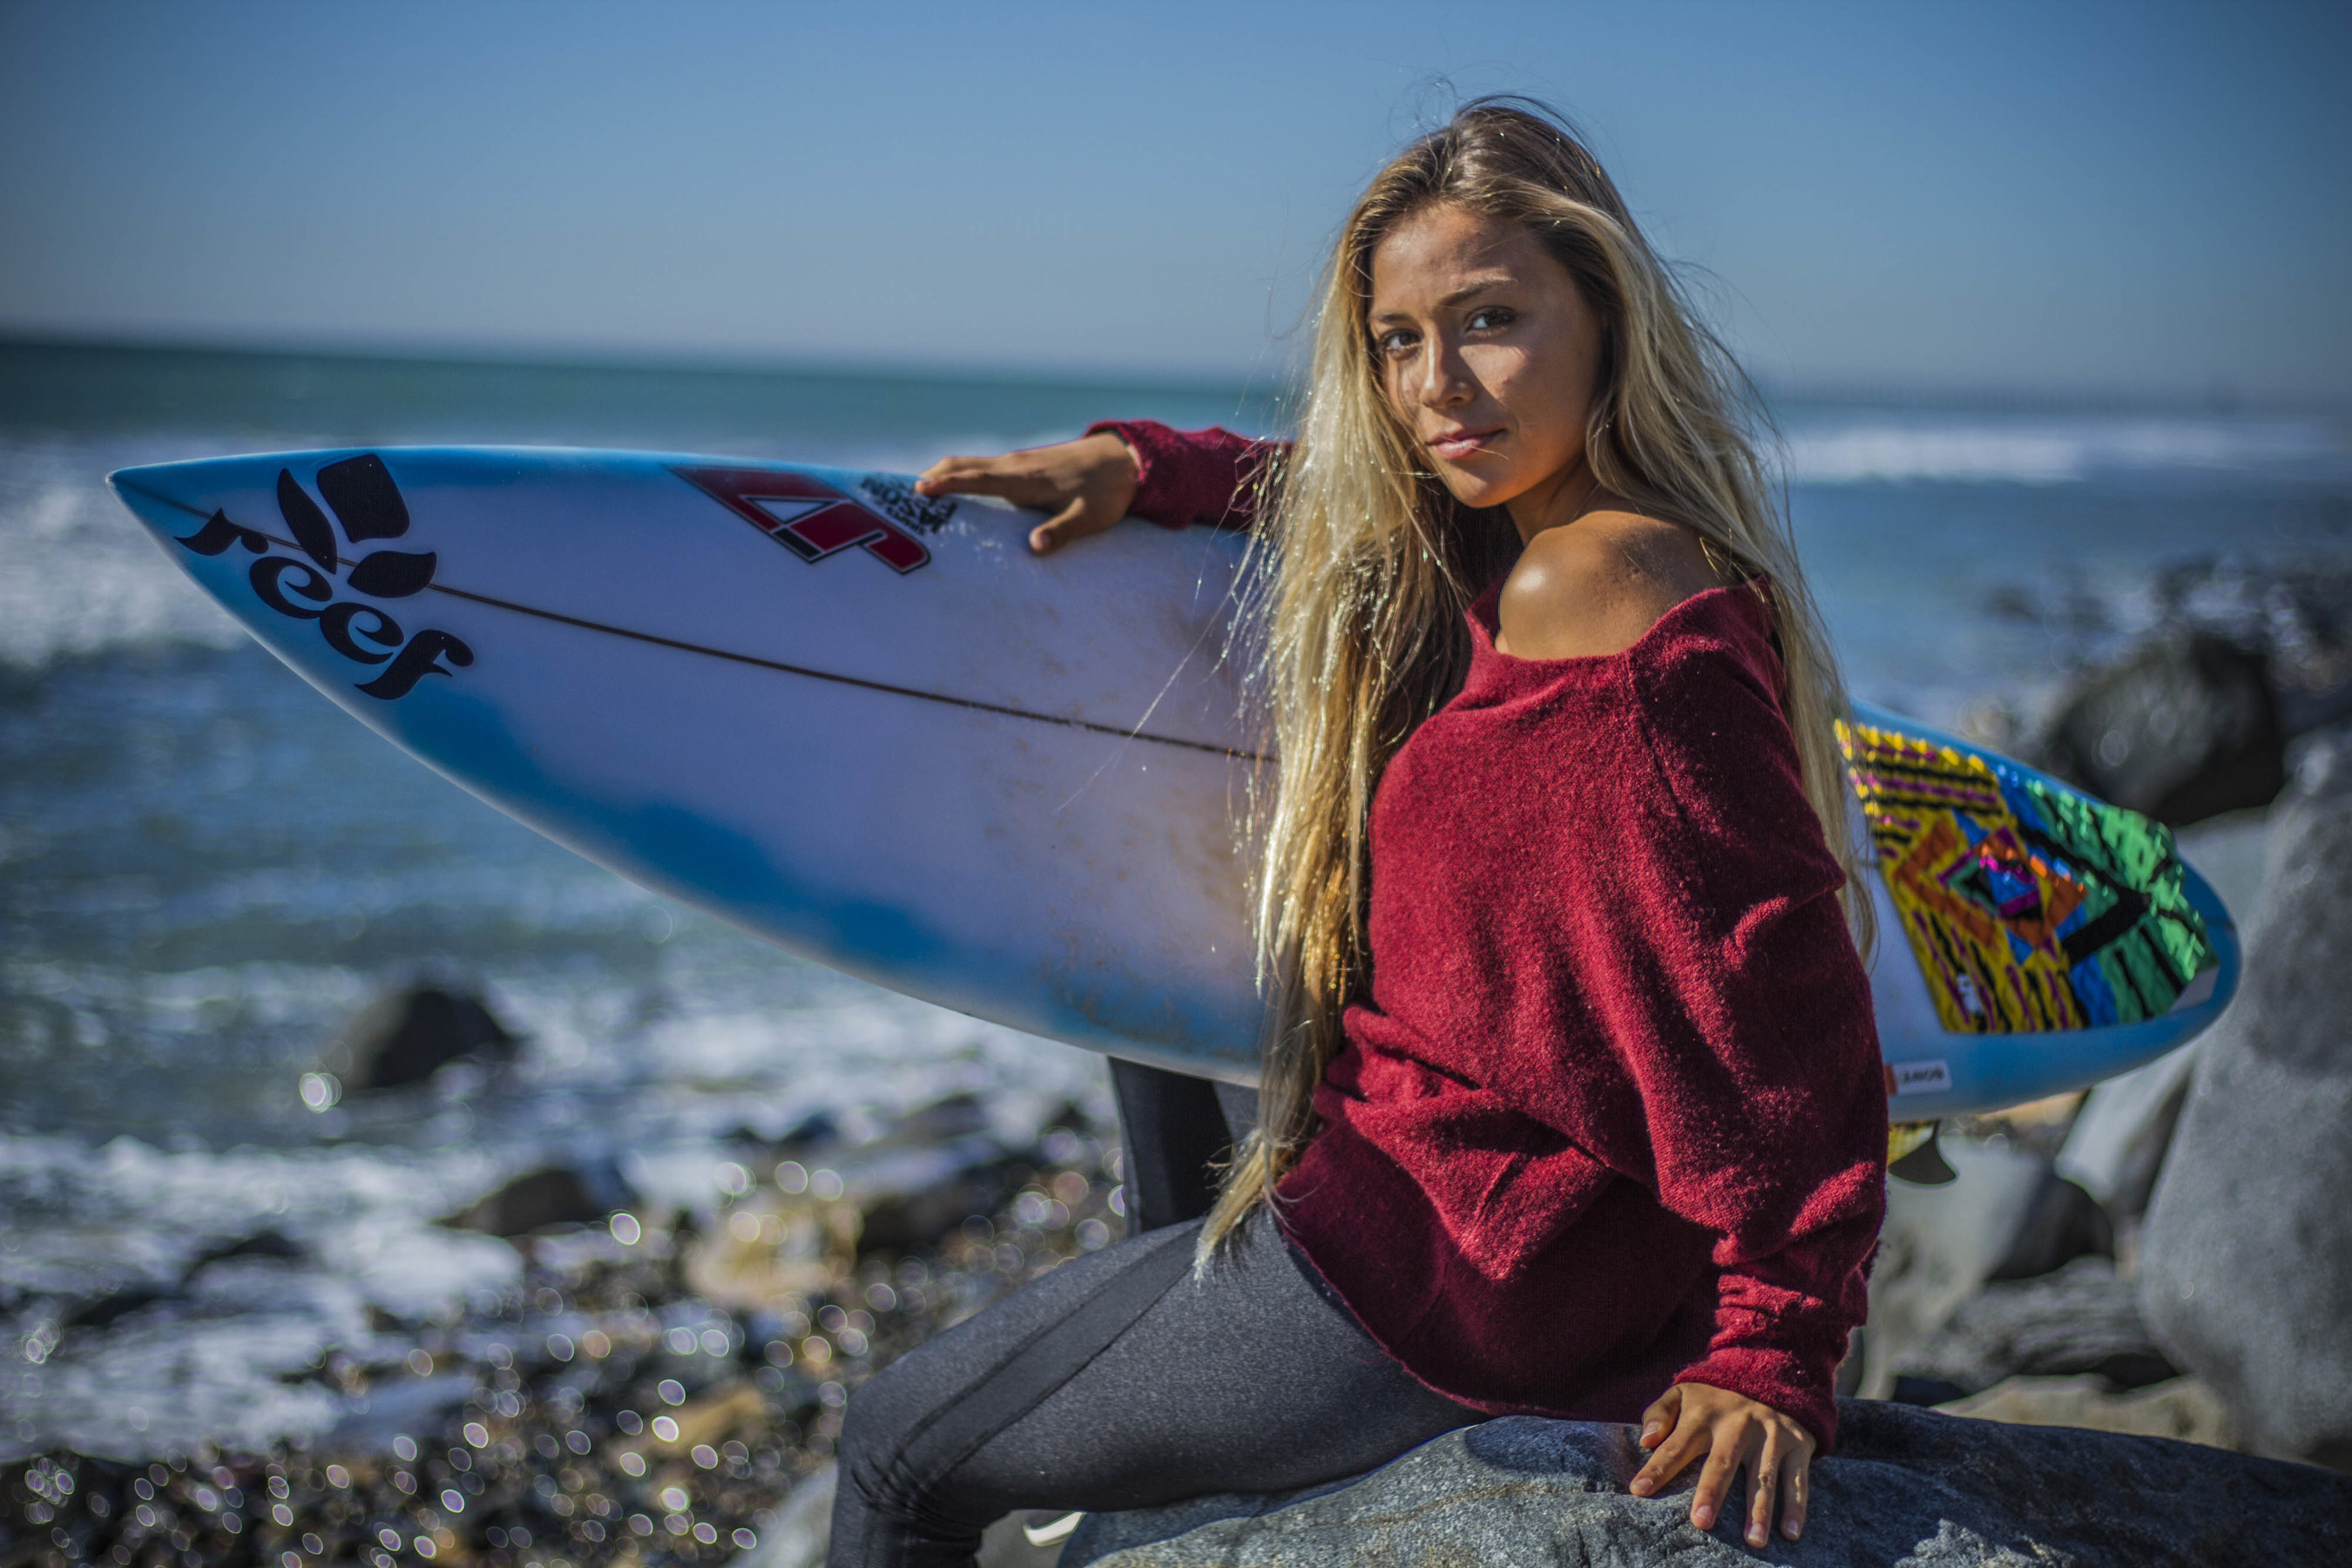 US Surf Champion and the latest VeganSmart ambassador, Tia Blanco